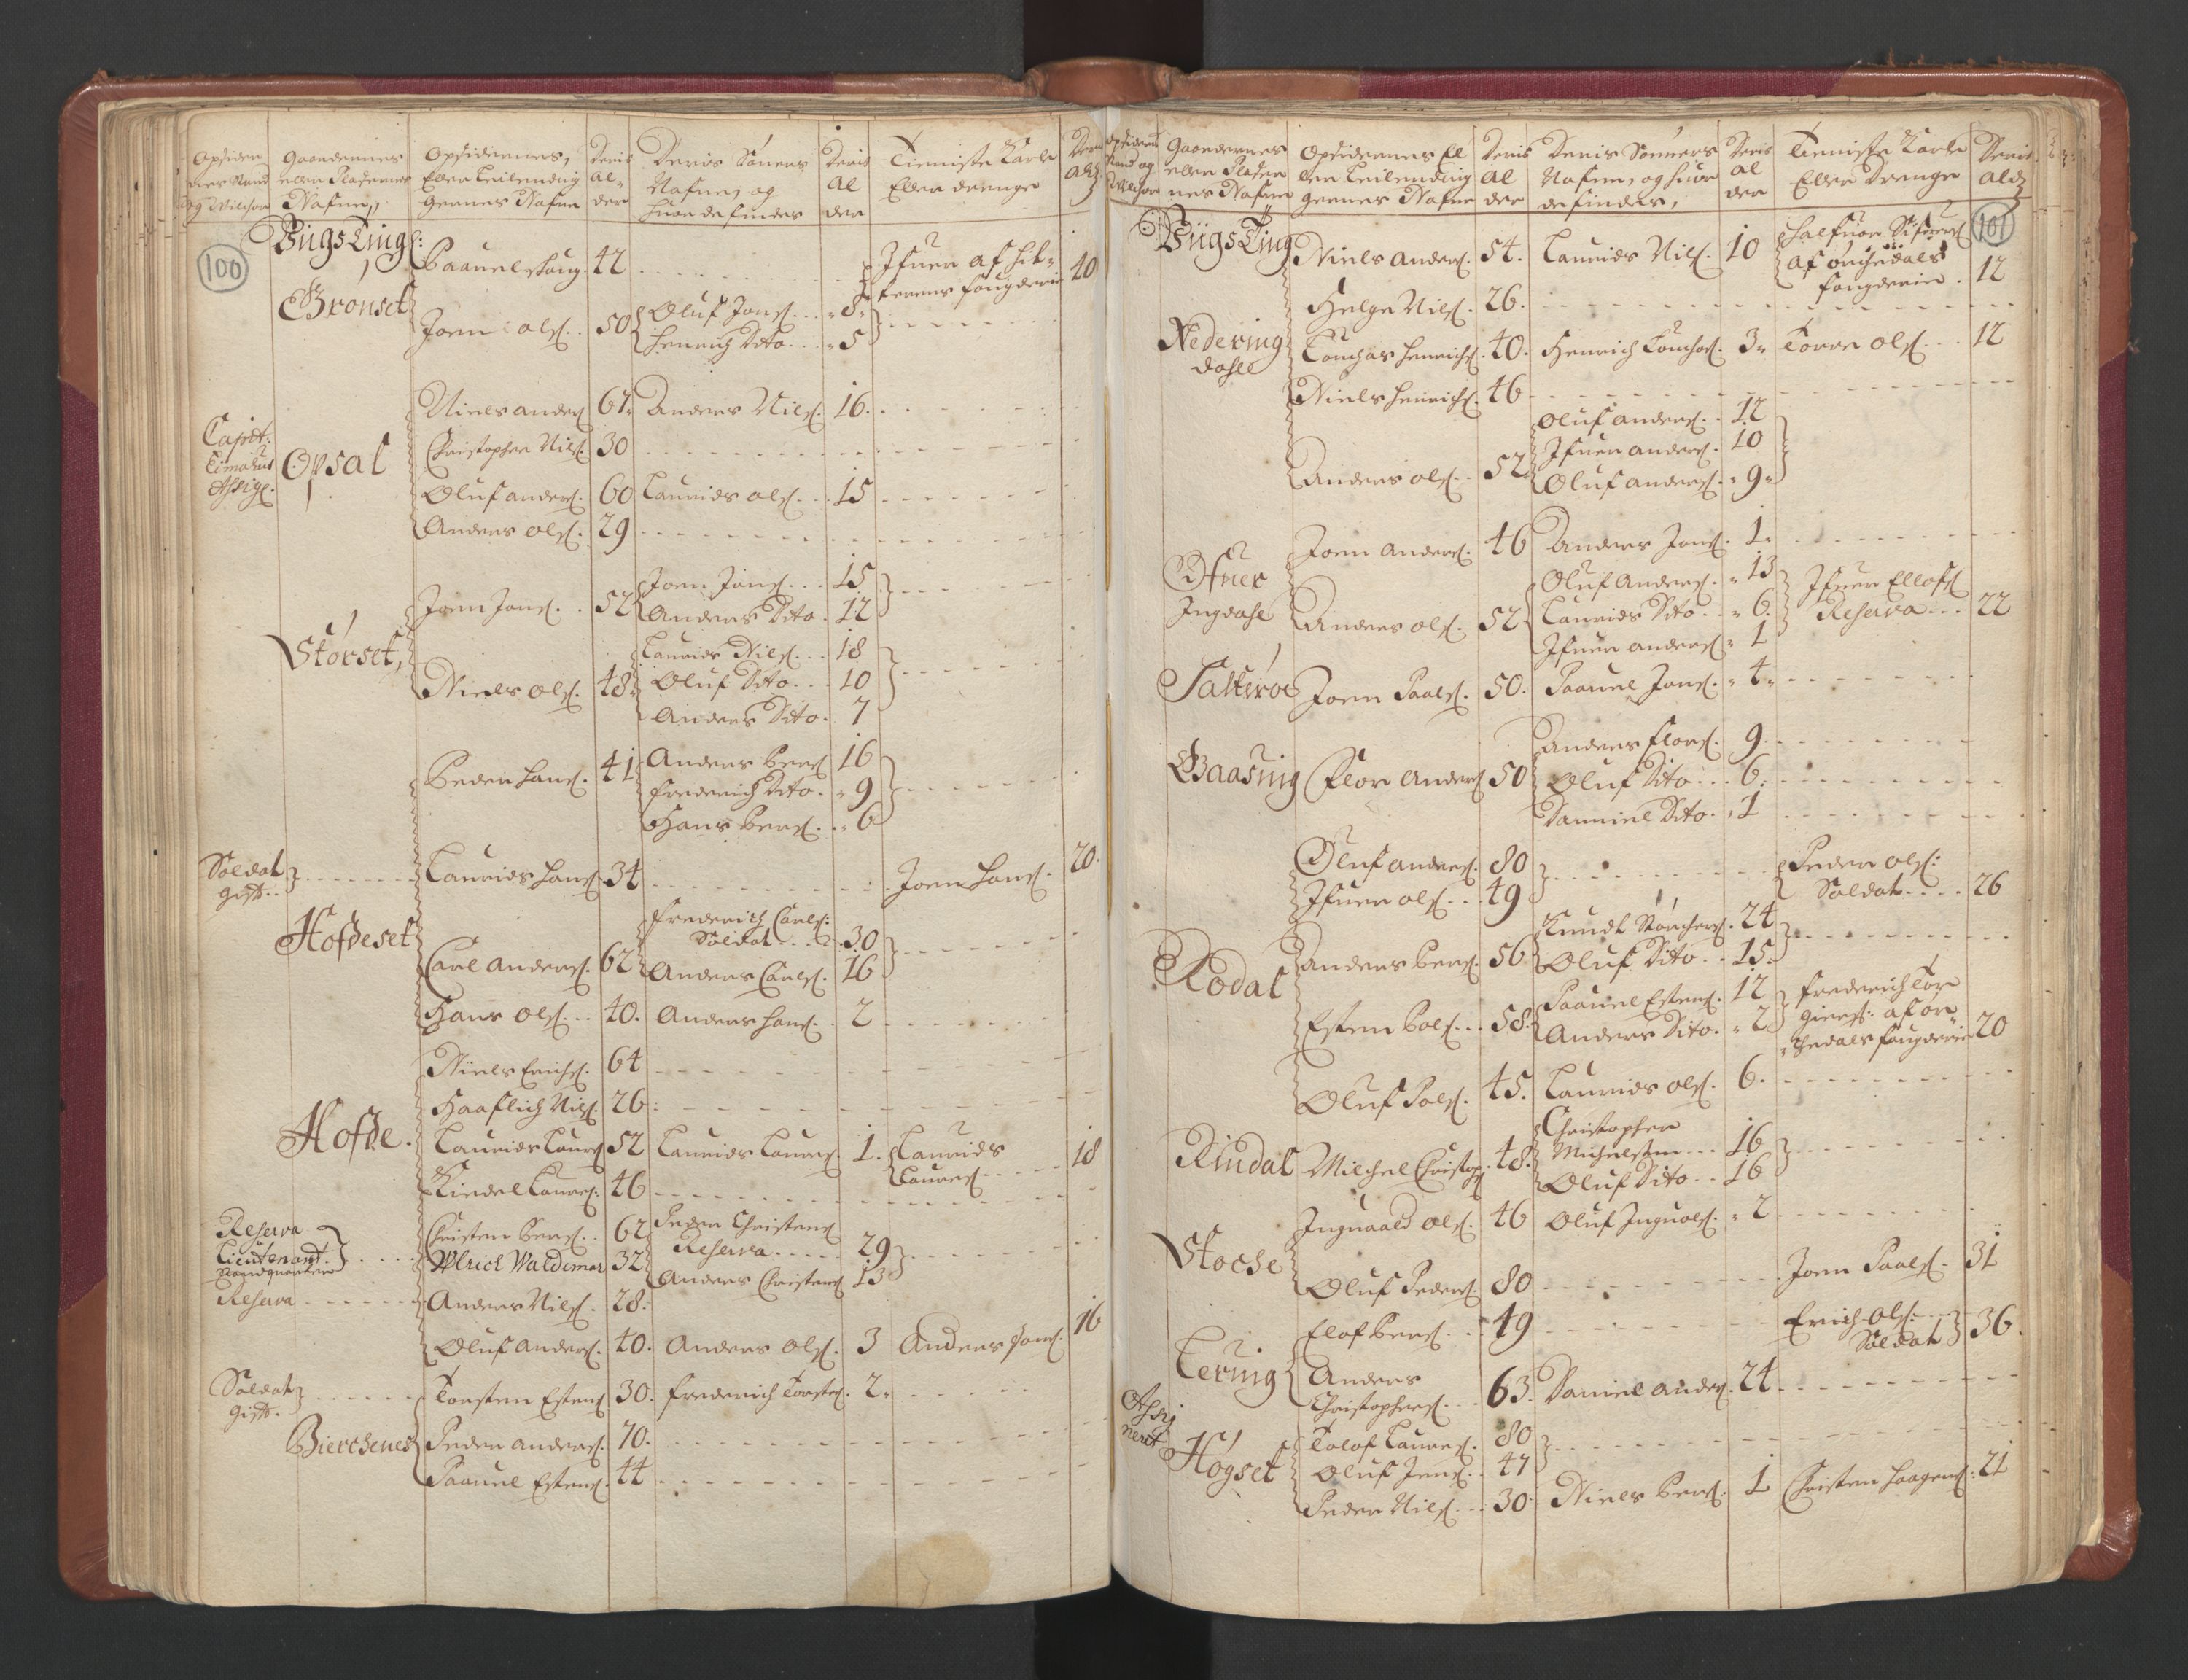 RA, Census (manntall) 1701, no. 11: Nordmøre fogderi and Romsdal fogderi, 1701, p. 100-101